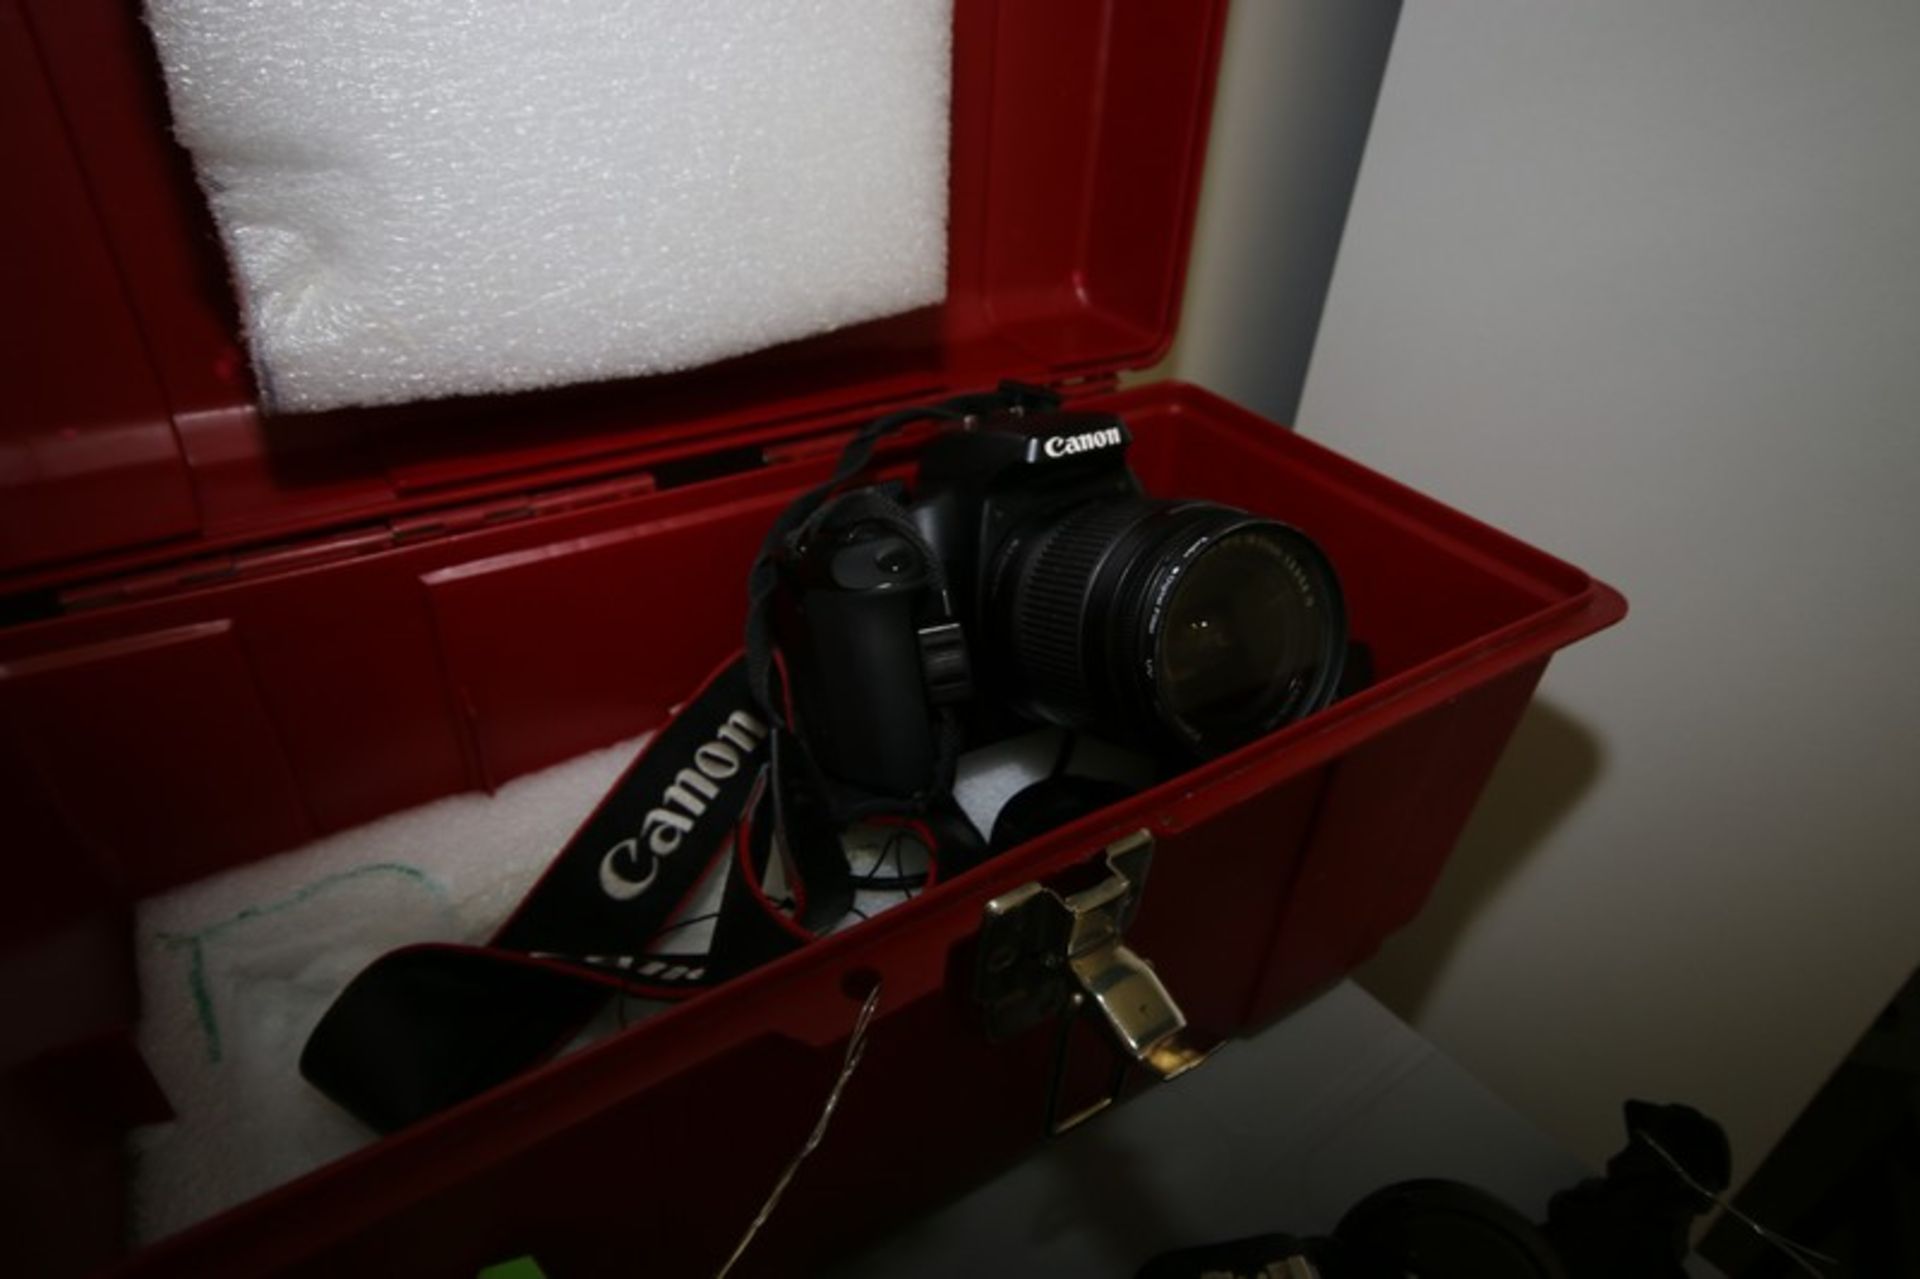 Canon Rebel XS Camera - 10.1 MP APS-C size CMOS sensor and DIGIC III image processor, 2.5-inch